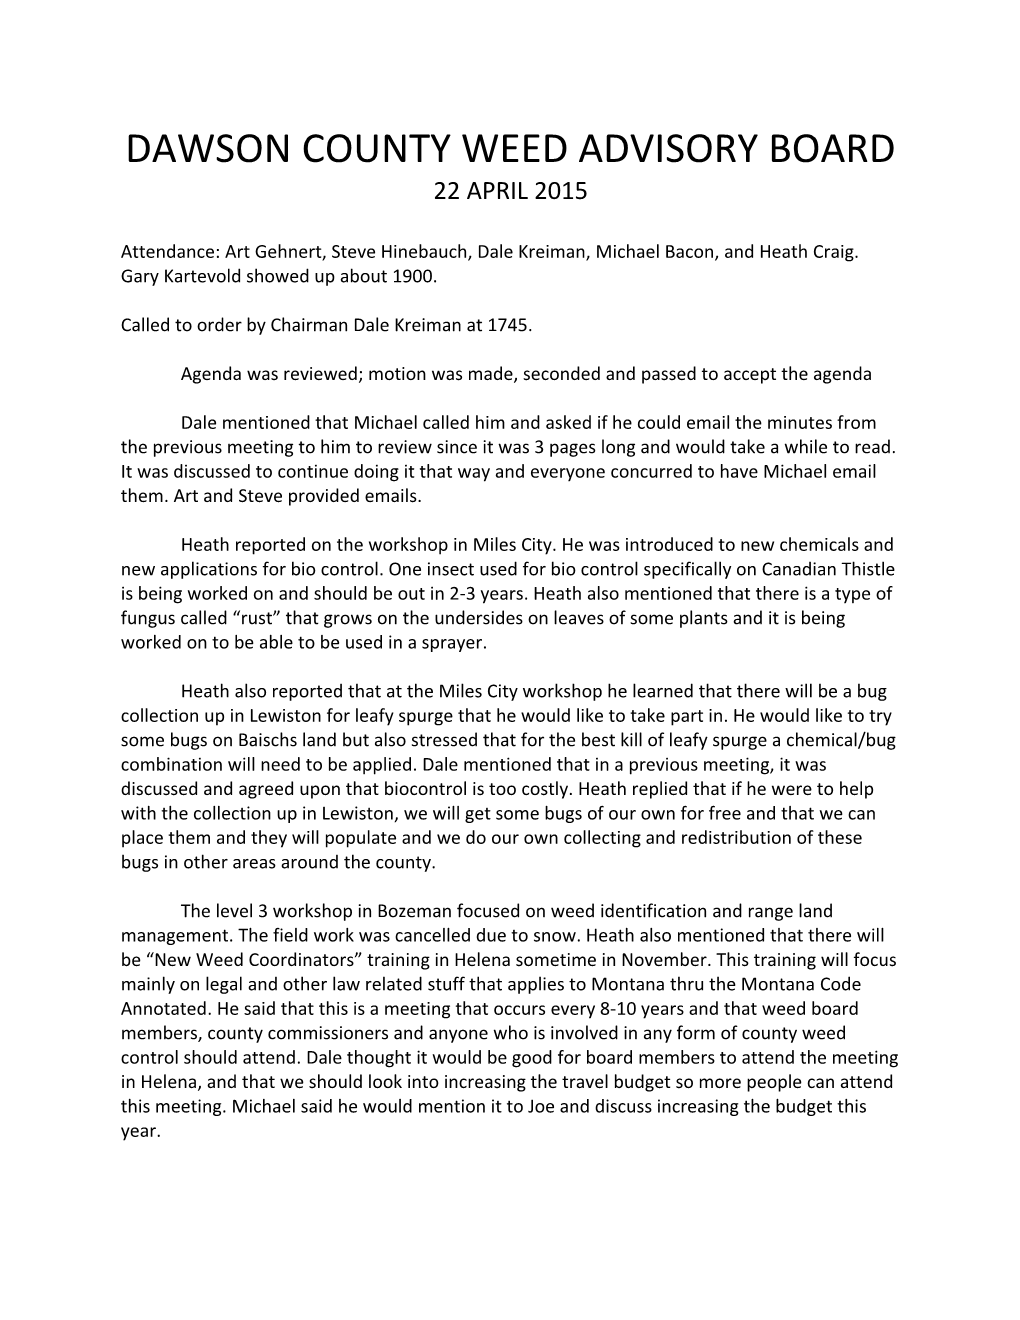 Dawson County Weed Advisory Board